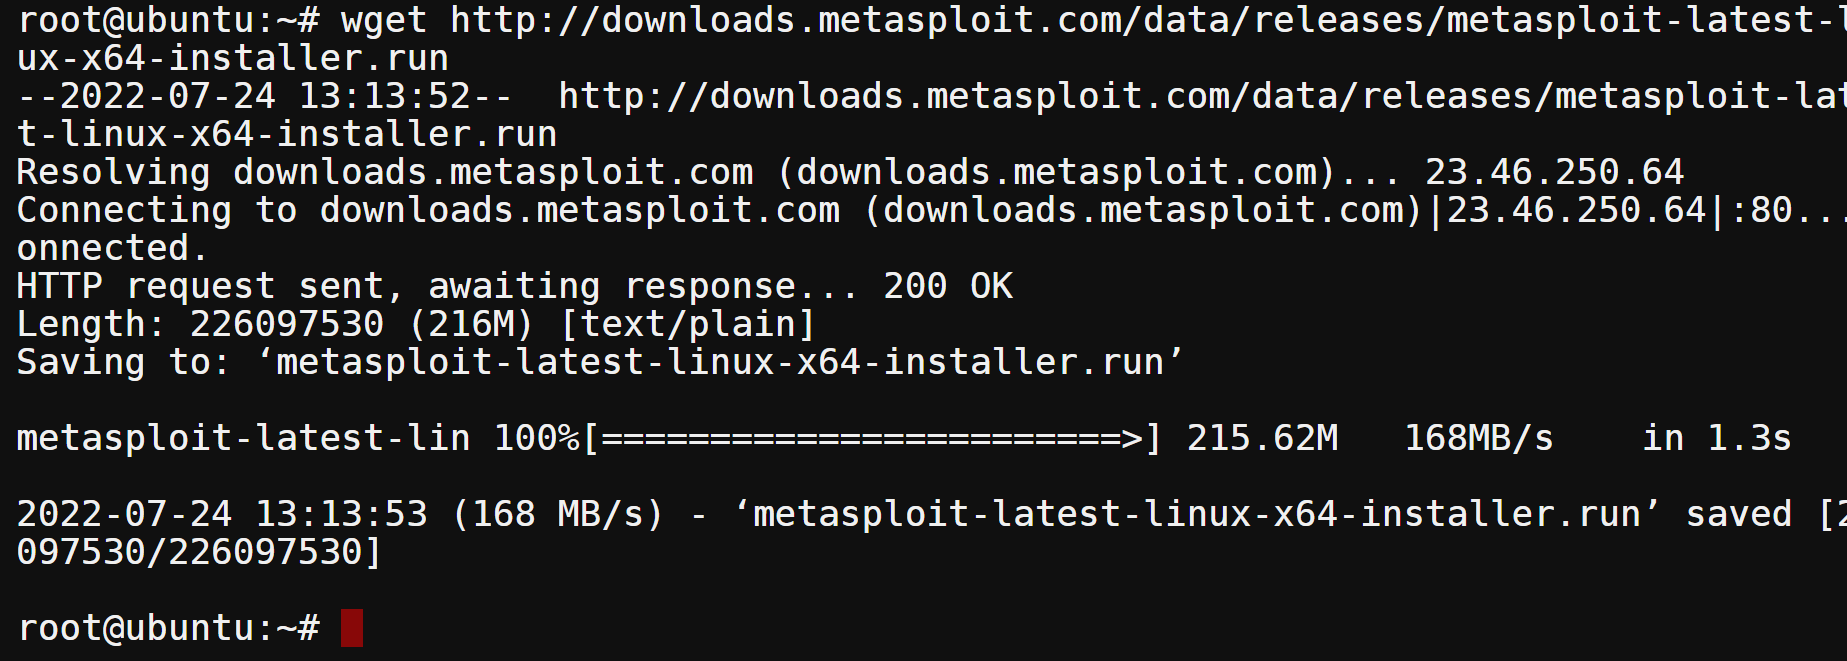 Downloading the latest version of the Metasploit installer.